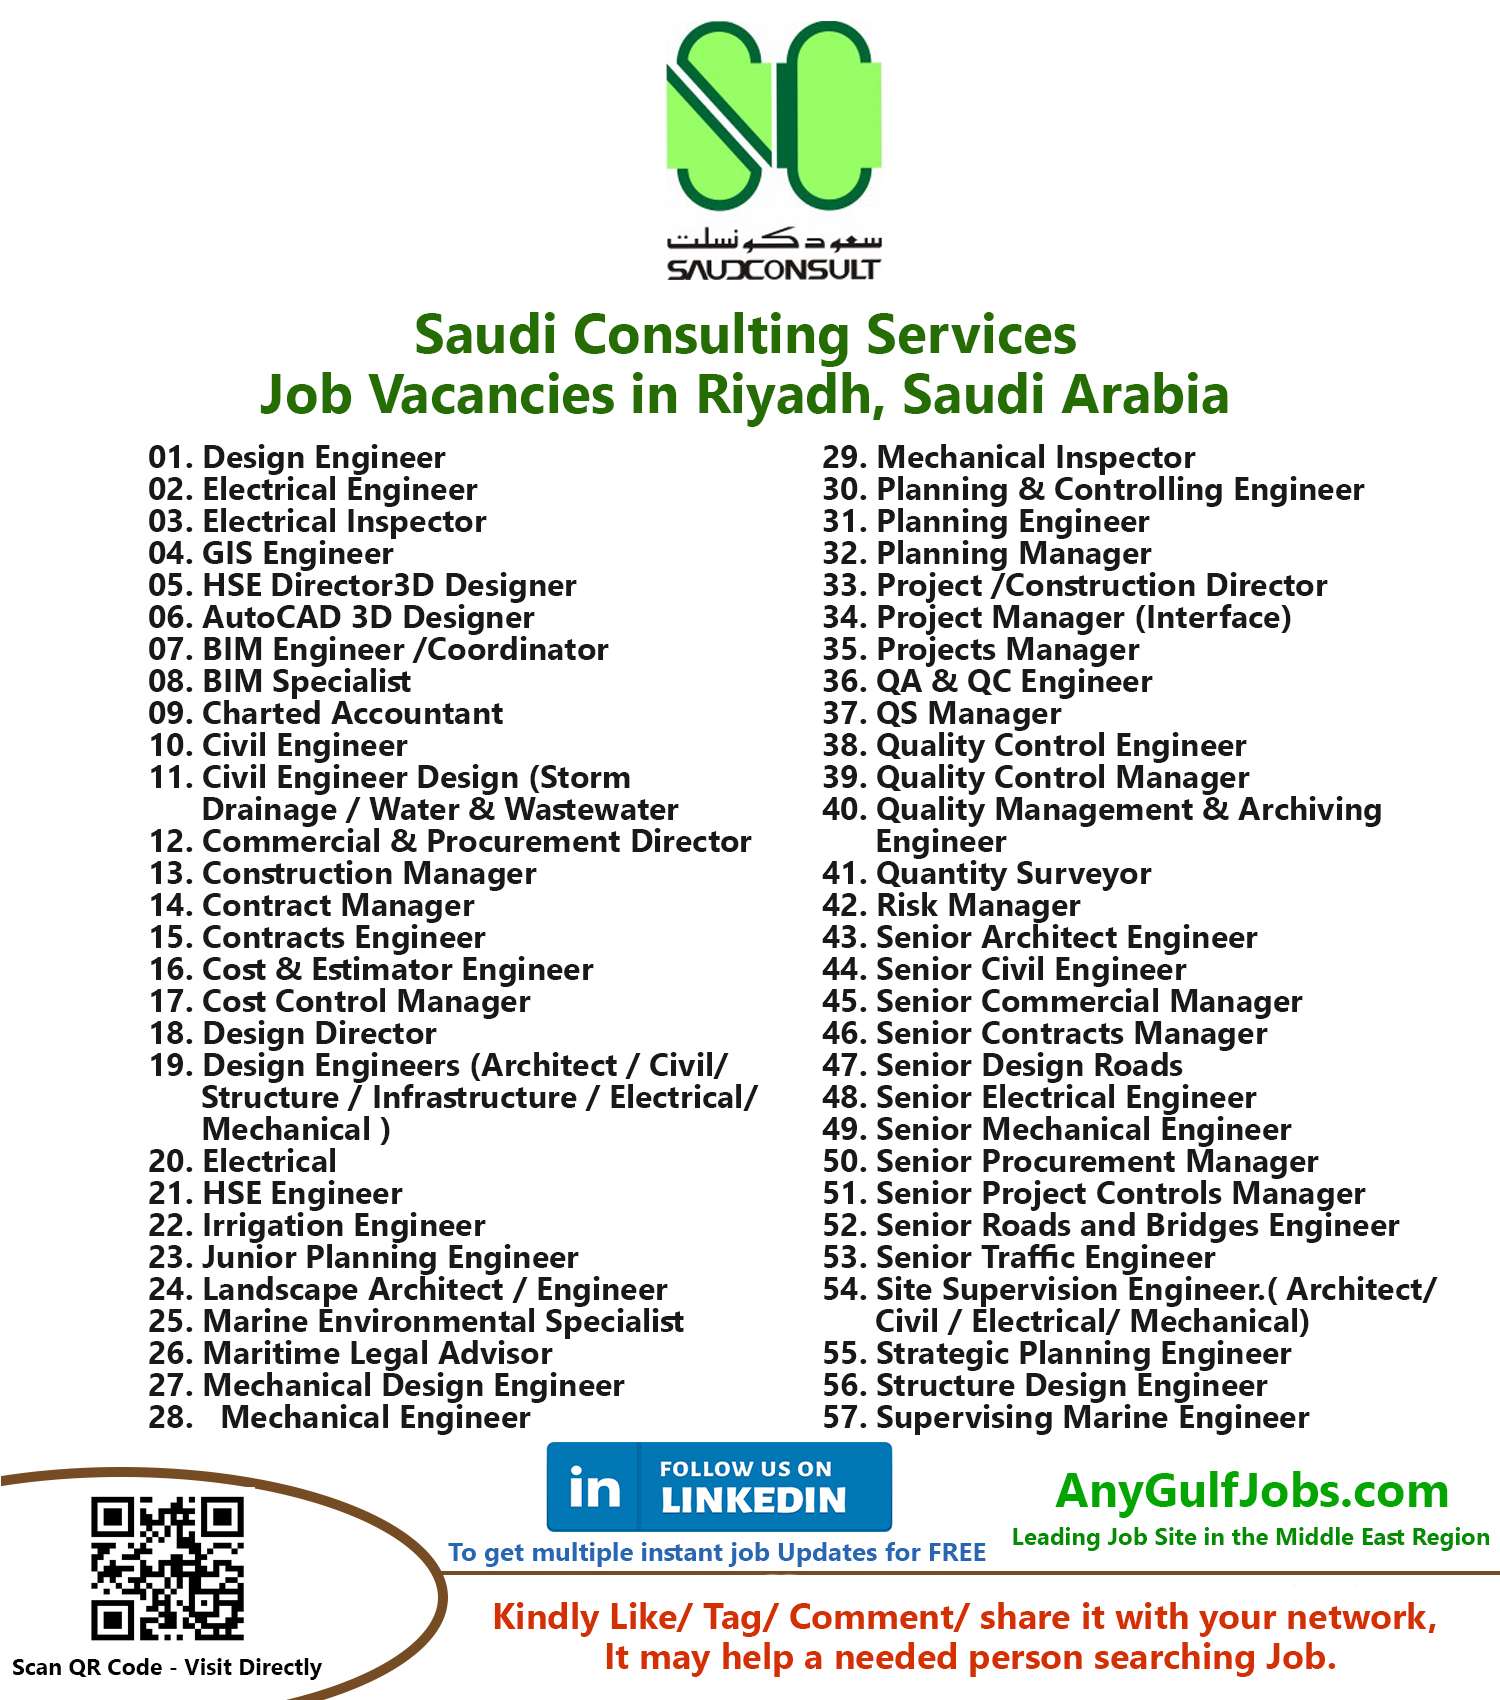 Saudi Consulting Services - SAUD CONSULT Job Vacancies in Riyadh, Saudi Arabia